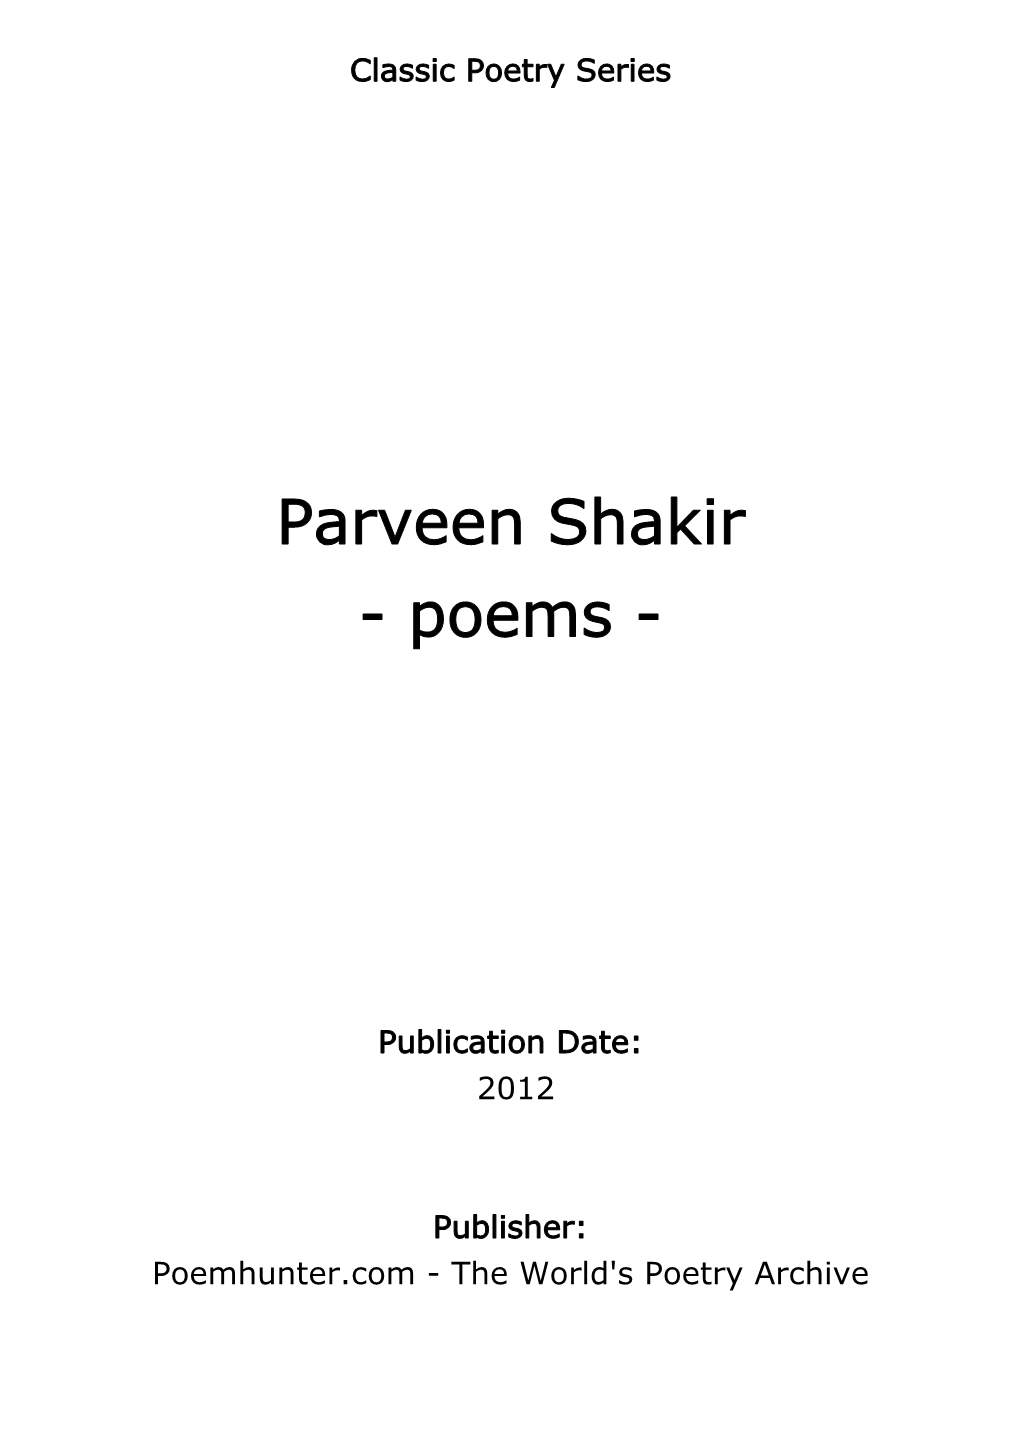 Parveen Shakir - Poems